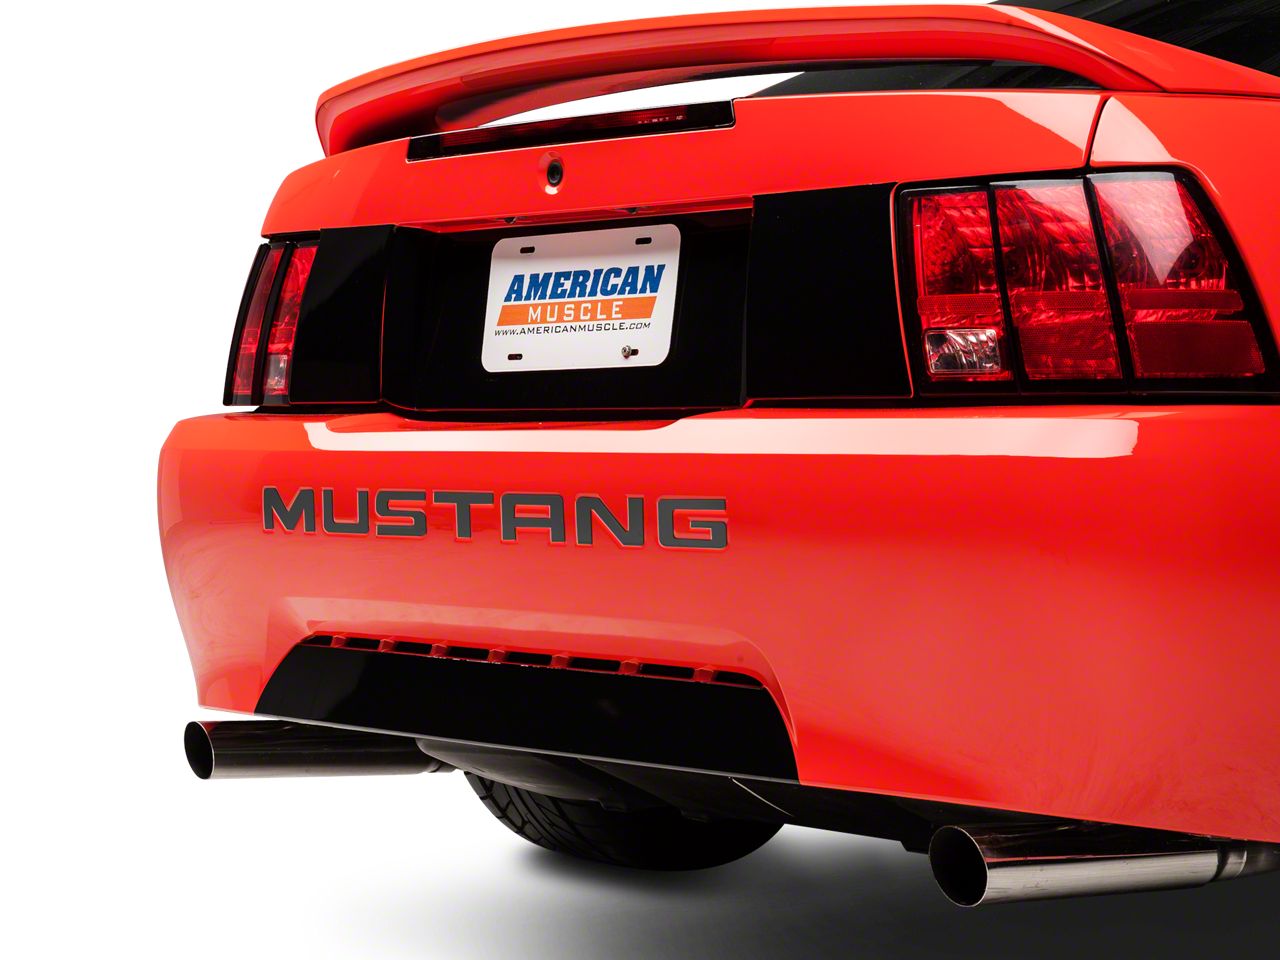 Mustang Bumper Inserts 1999-2004